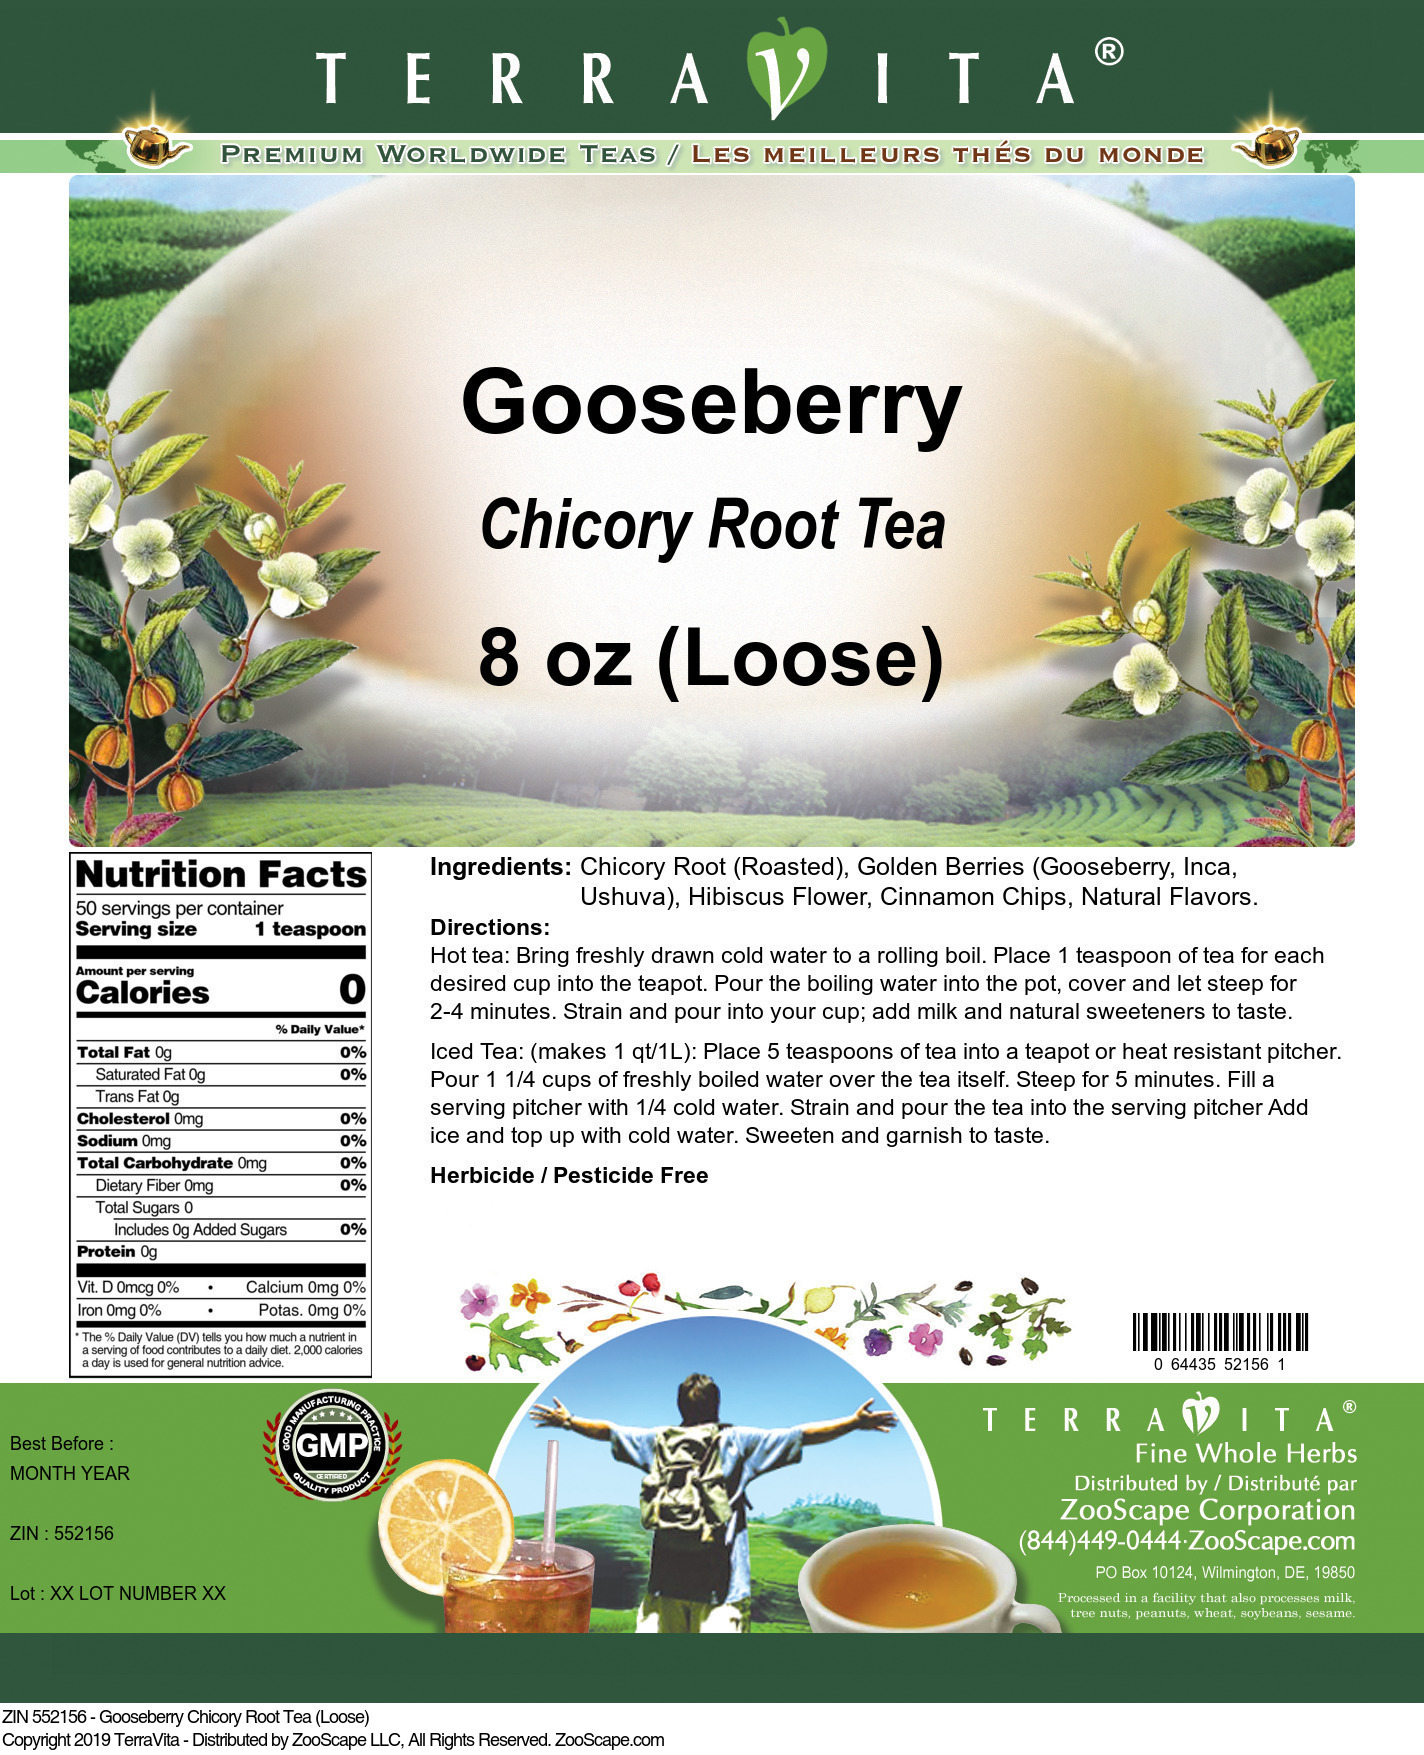 Gooseberry Chicory Root Tea (Loose) - Label